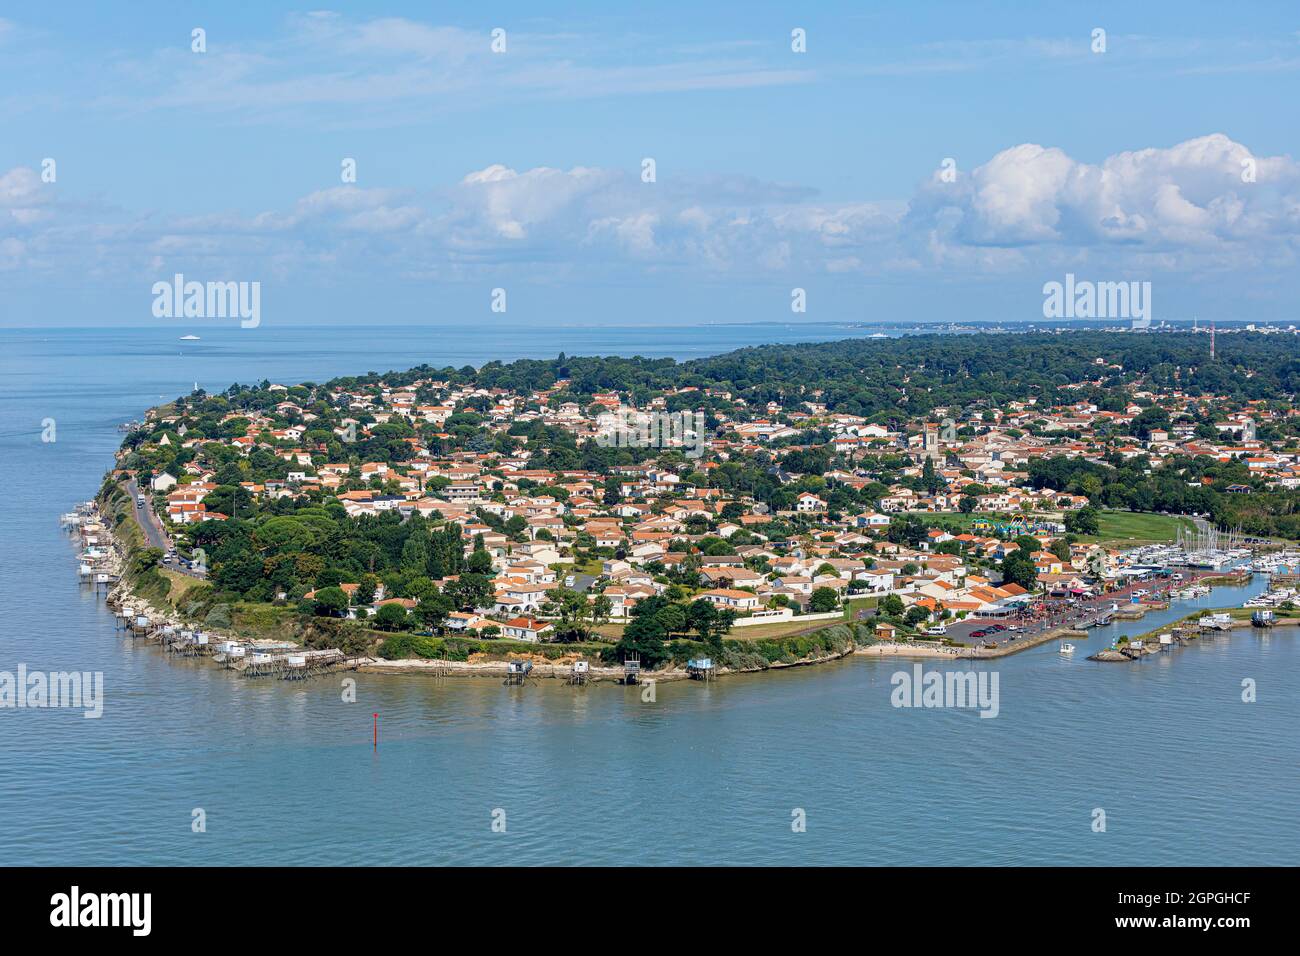 France, Charente Maritime, Meschers sur Gironde, Pointe de Meschers, the village and the port (aerial view) Stock Photo